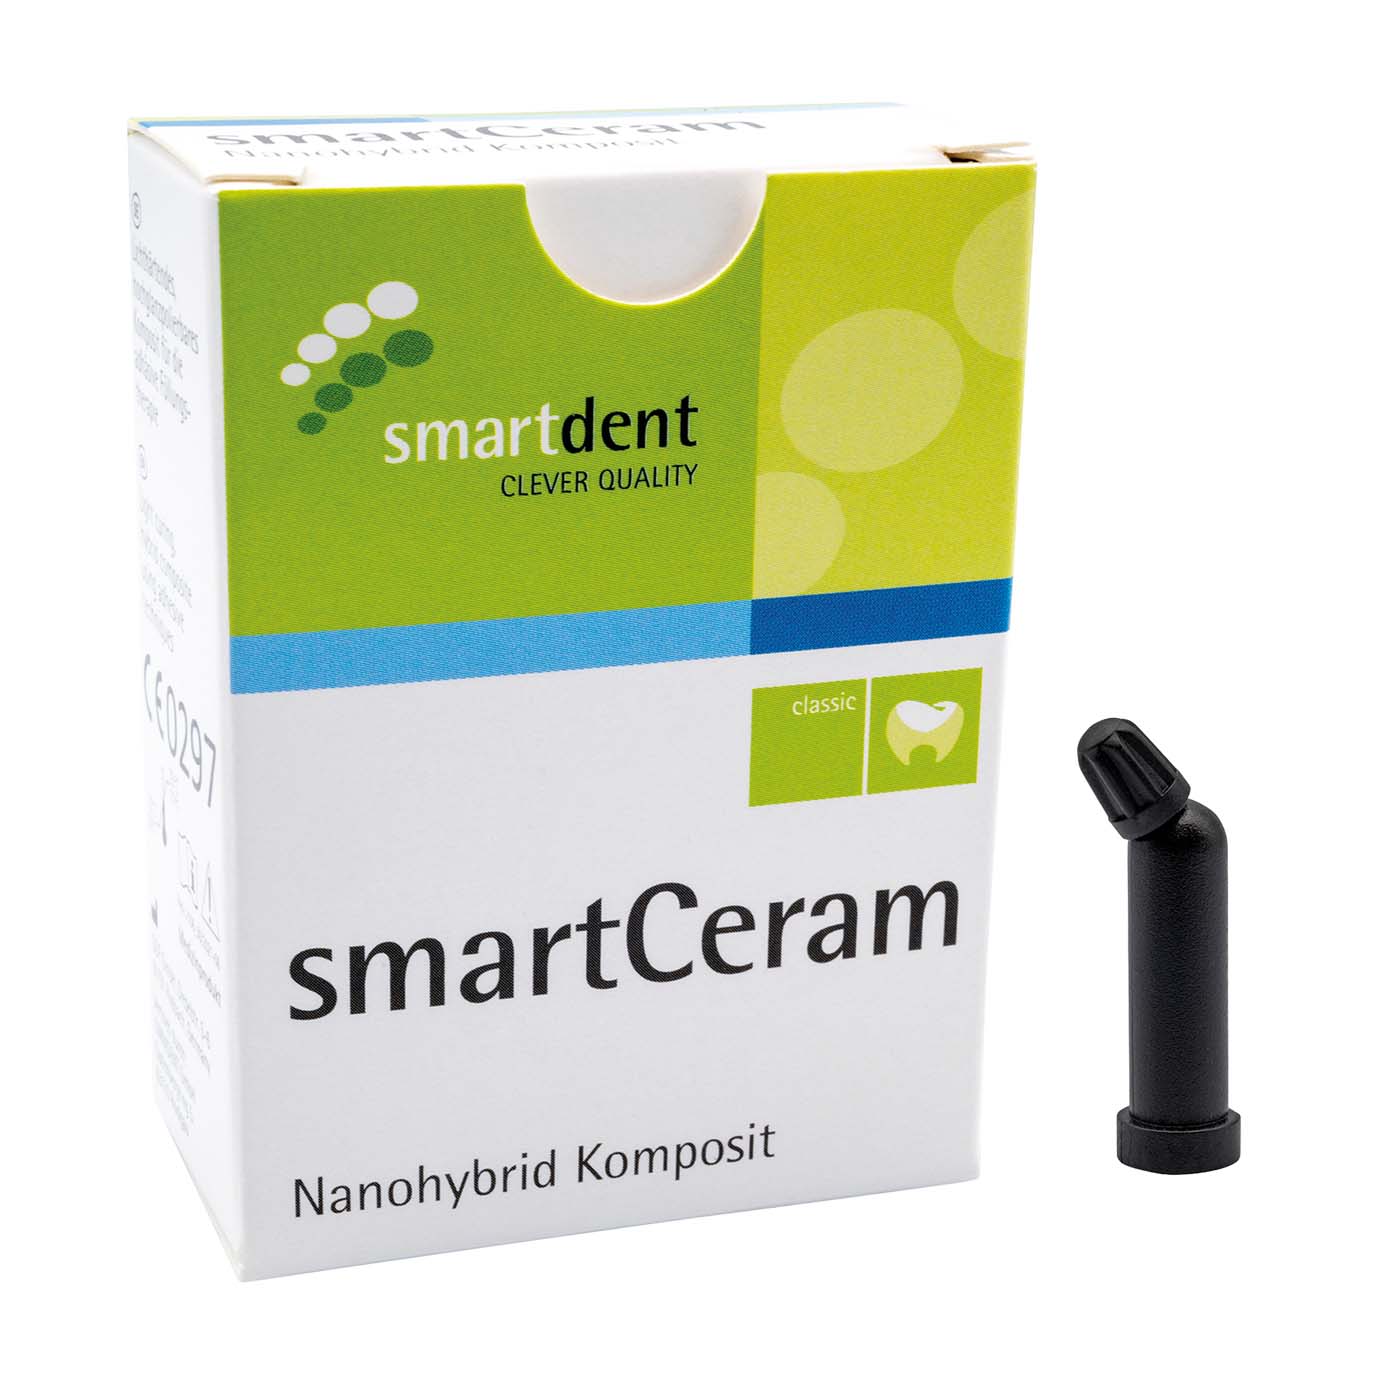 smartCeram smartdent